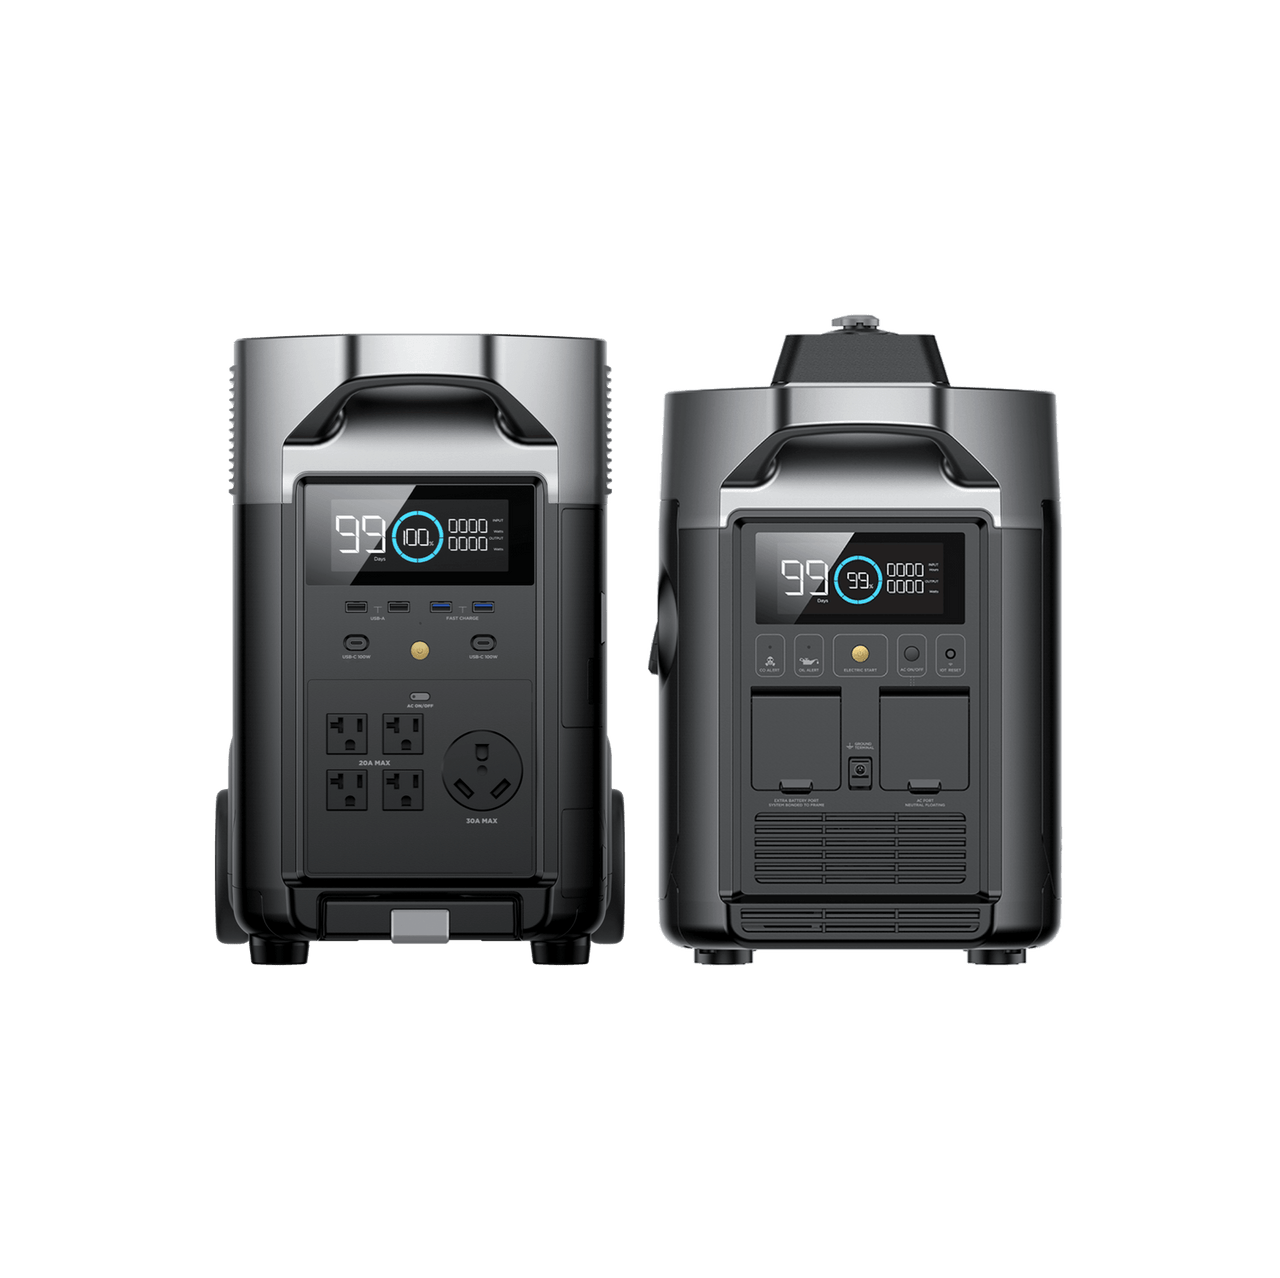 EcoFlow DELTA Pro + Smart Generator (Dual Fuel) + Adapter